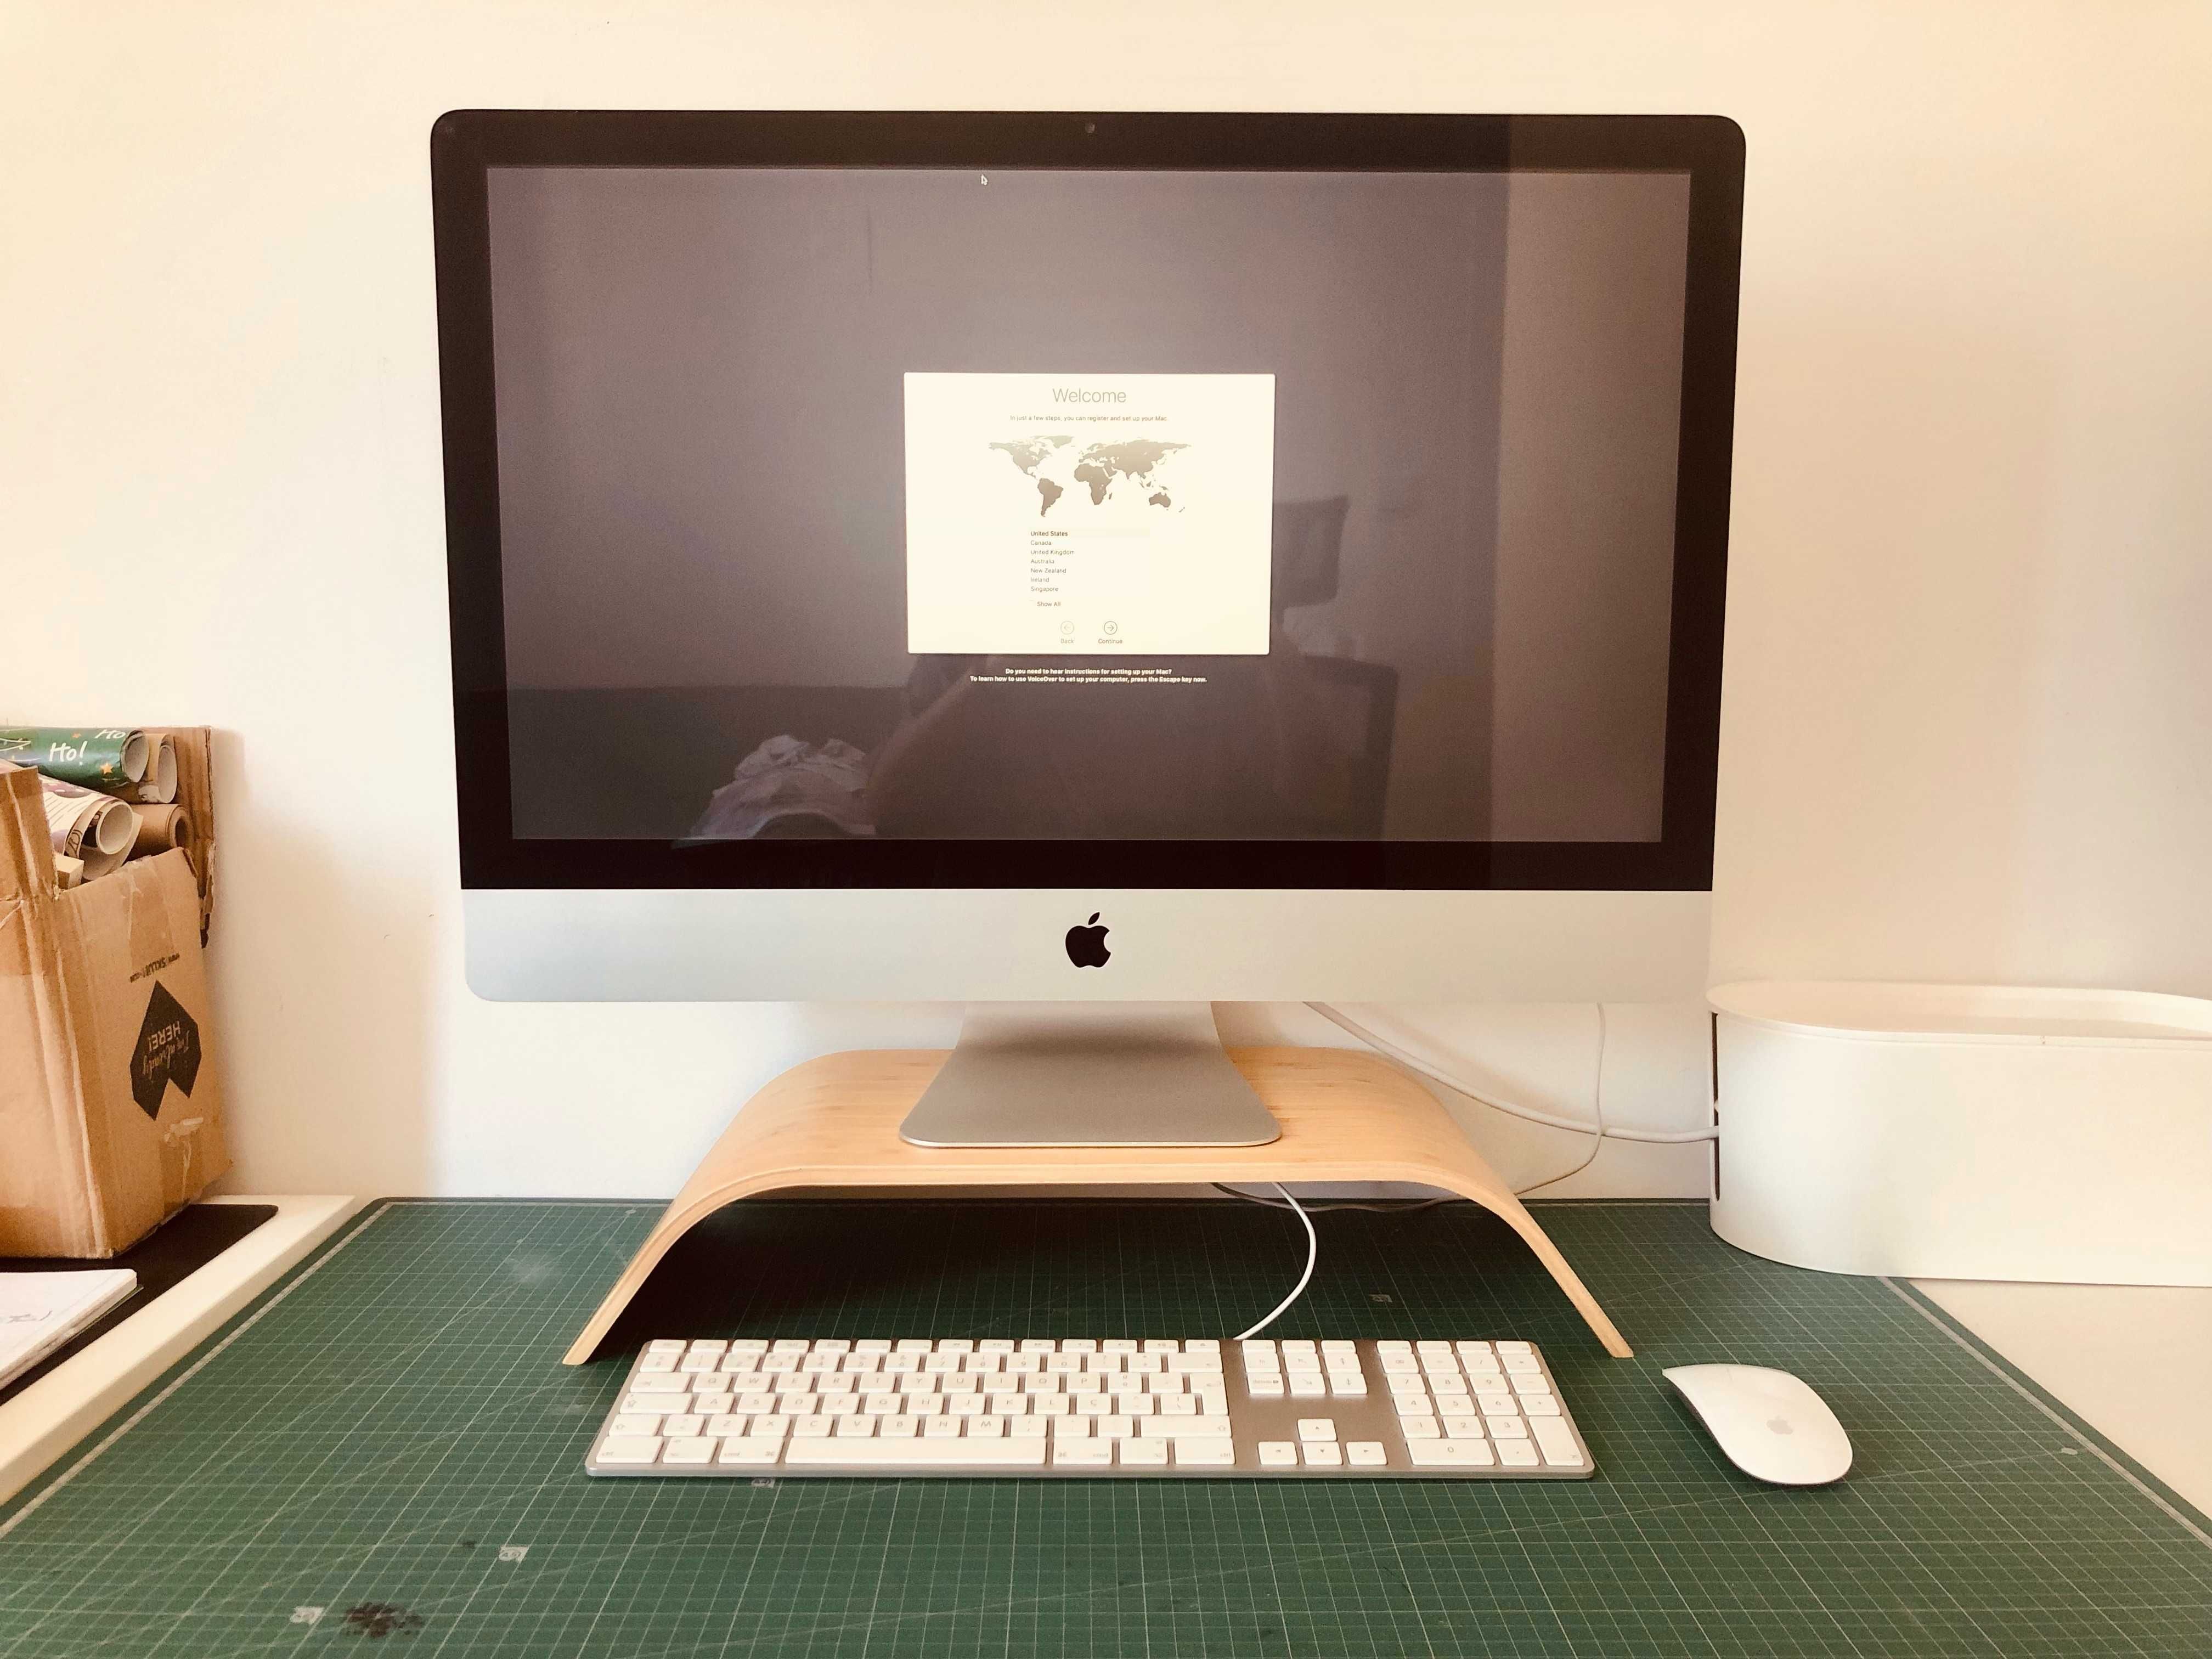 iMac 27'' (late 2009)